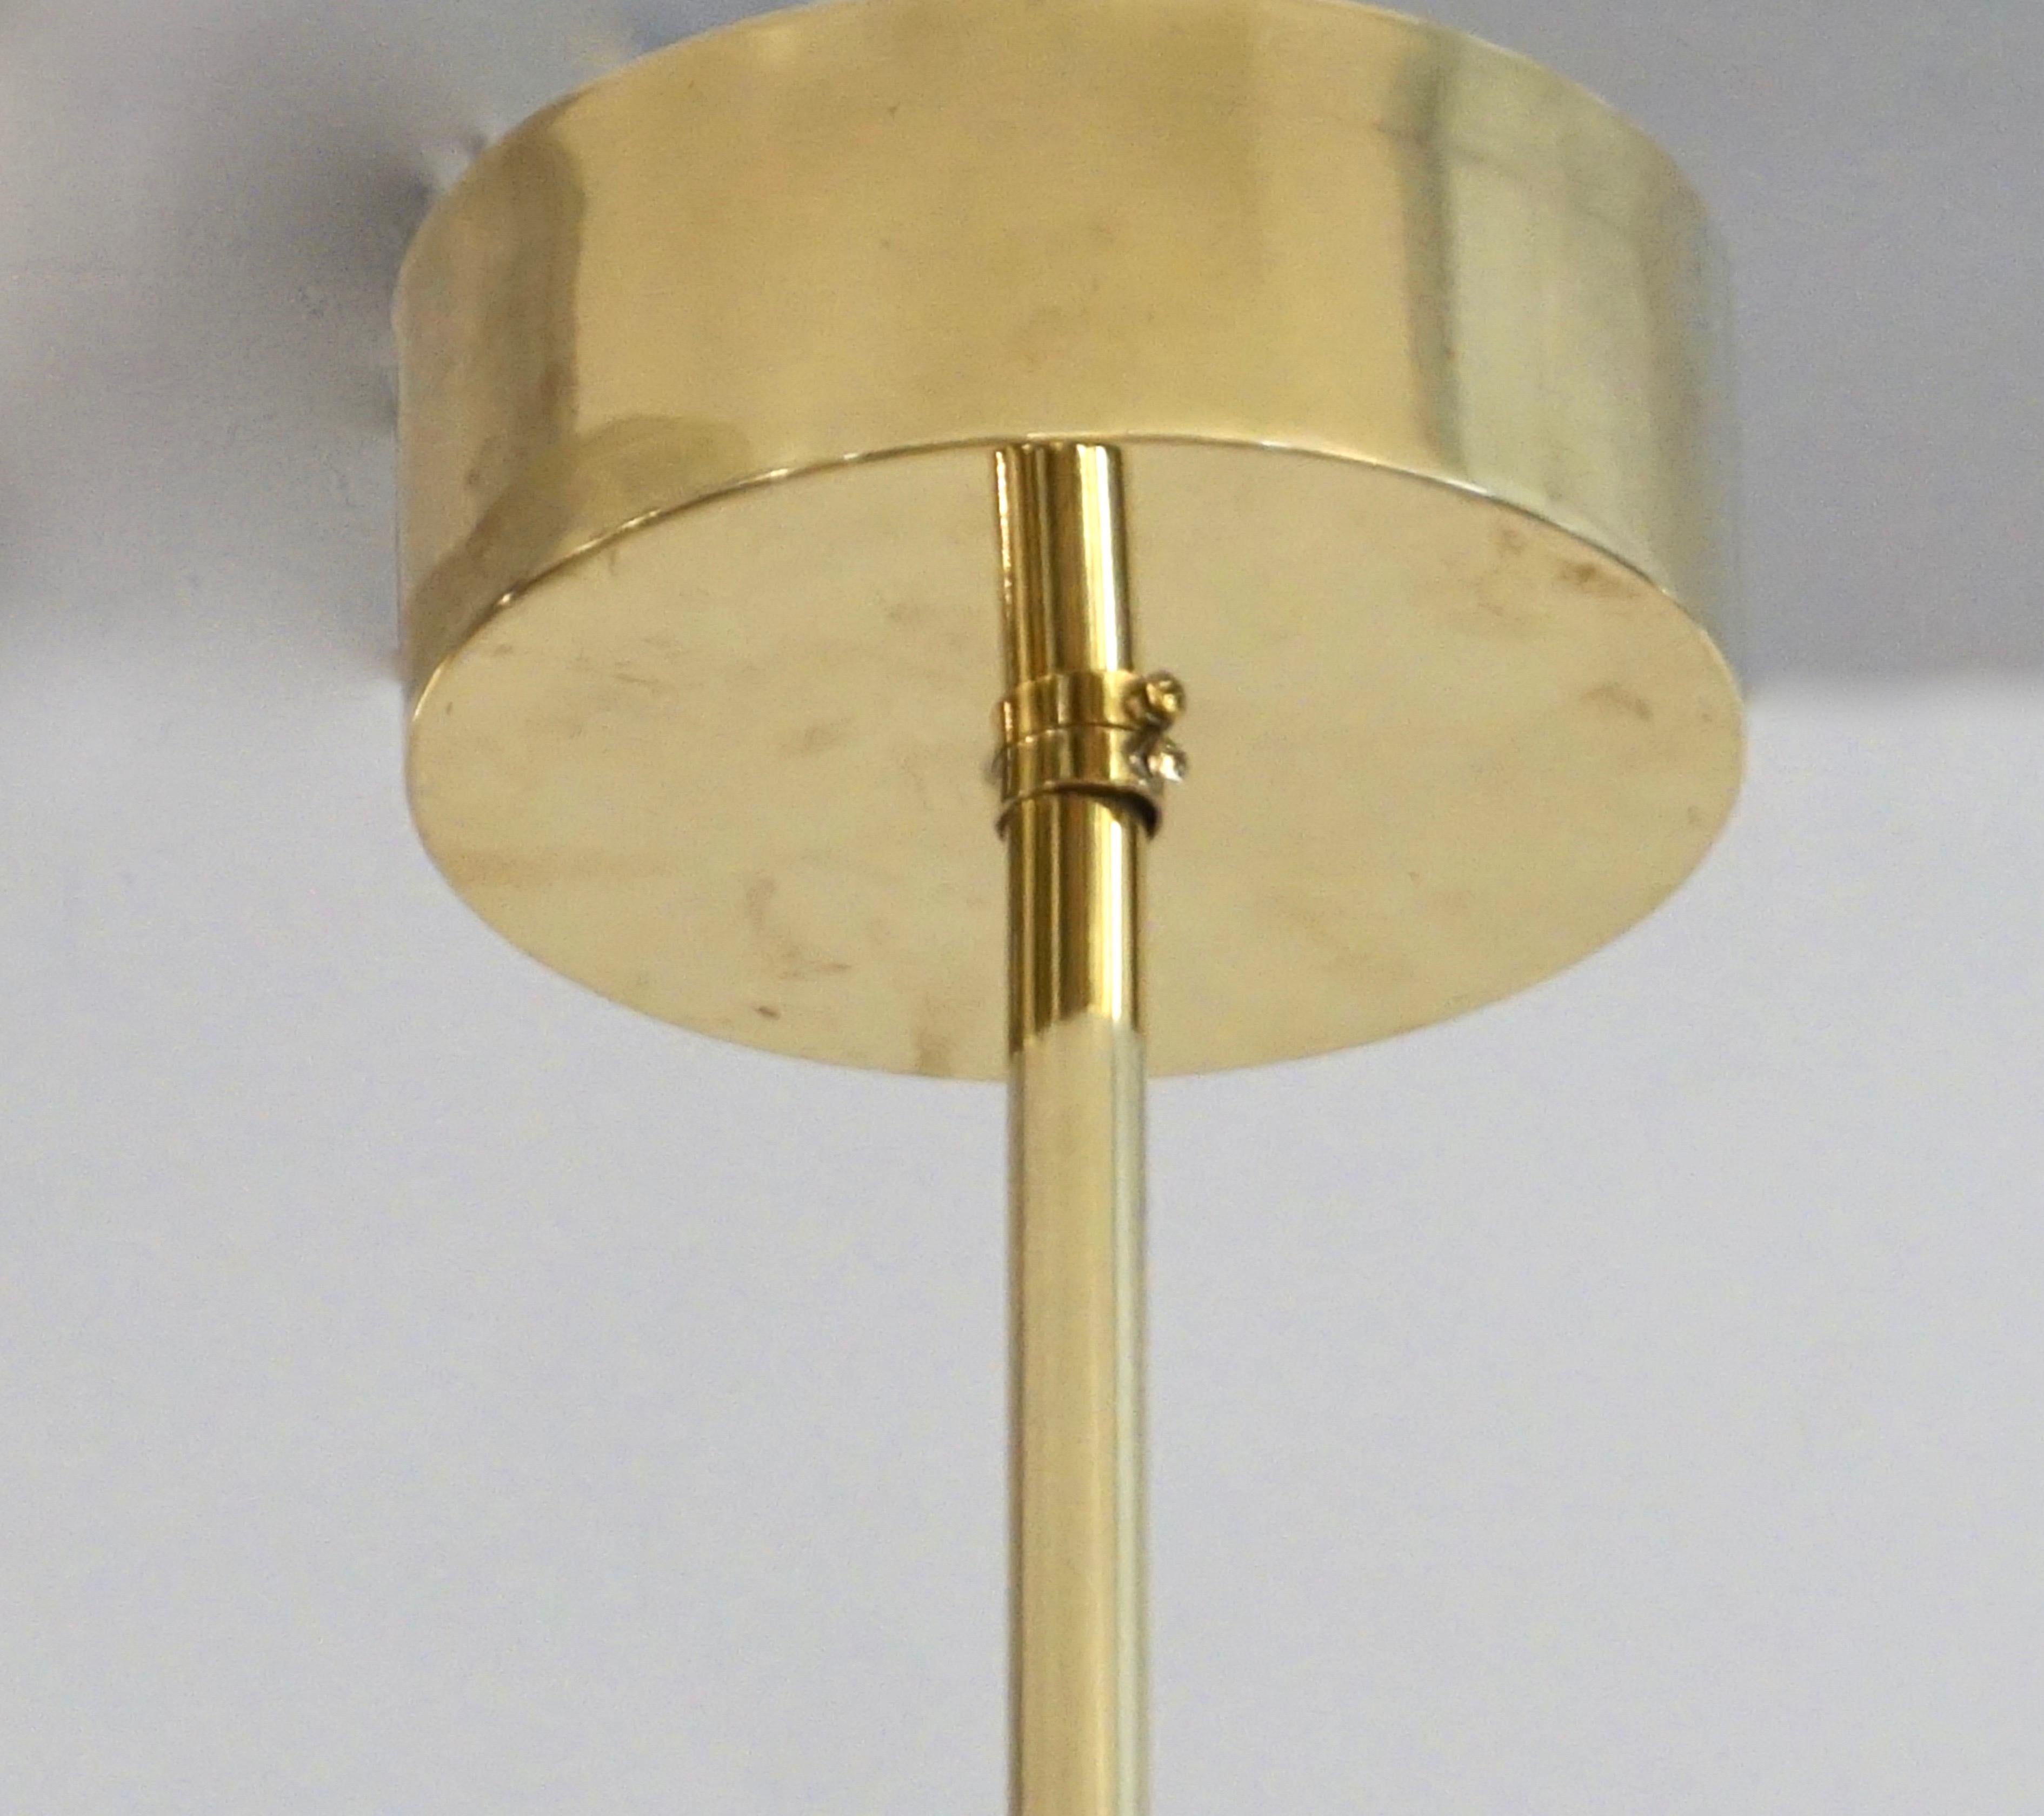 Bespoke Italian Alabaster White Murano Glass Brass Curved Globe Chandelier For Sale 7